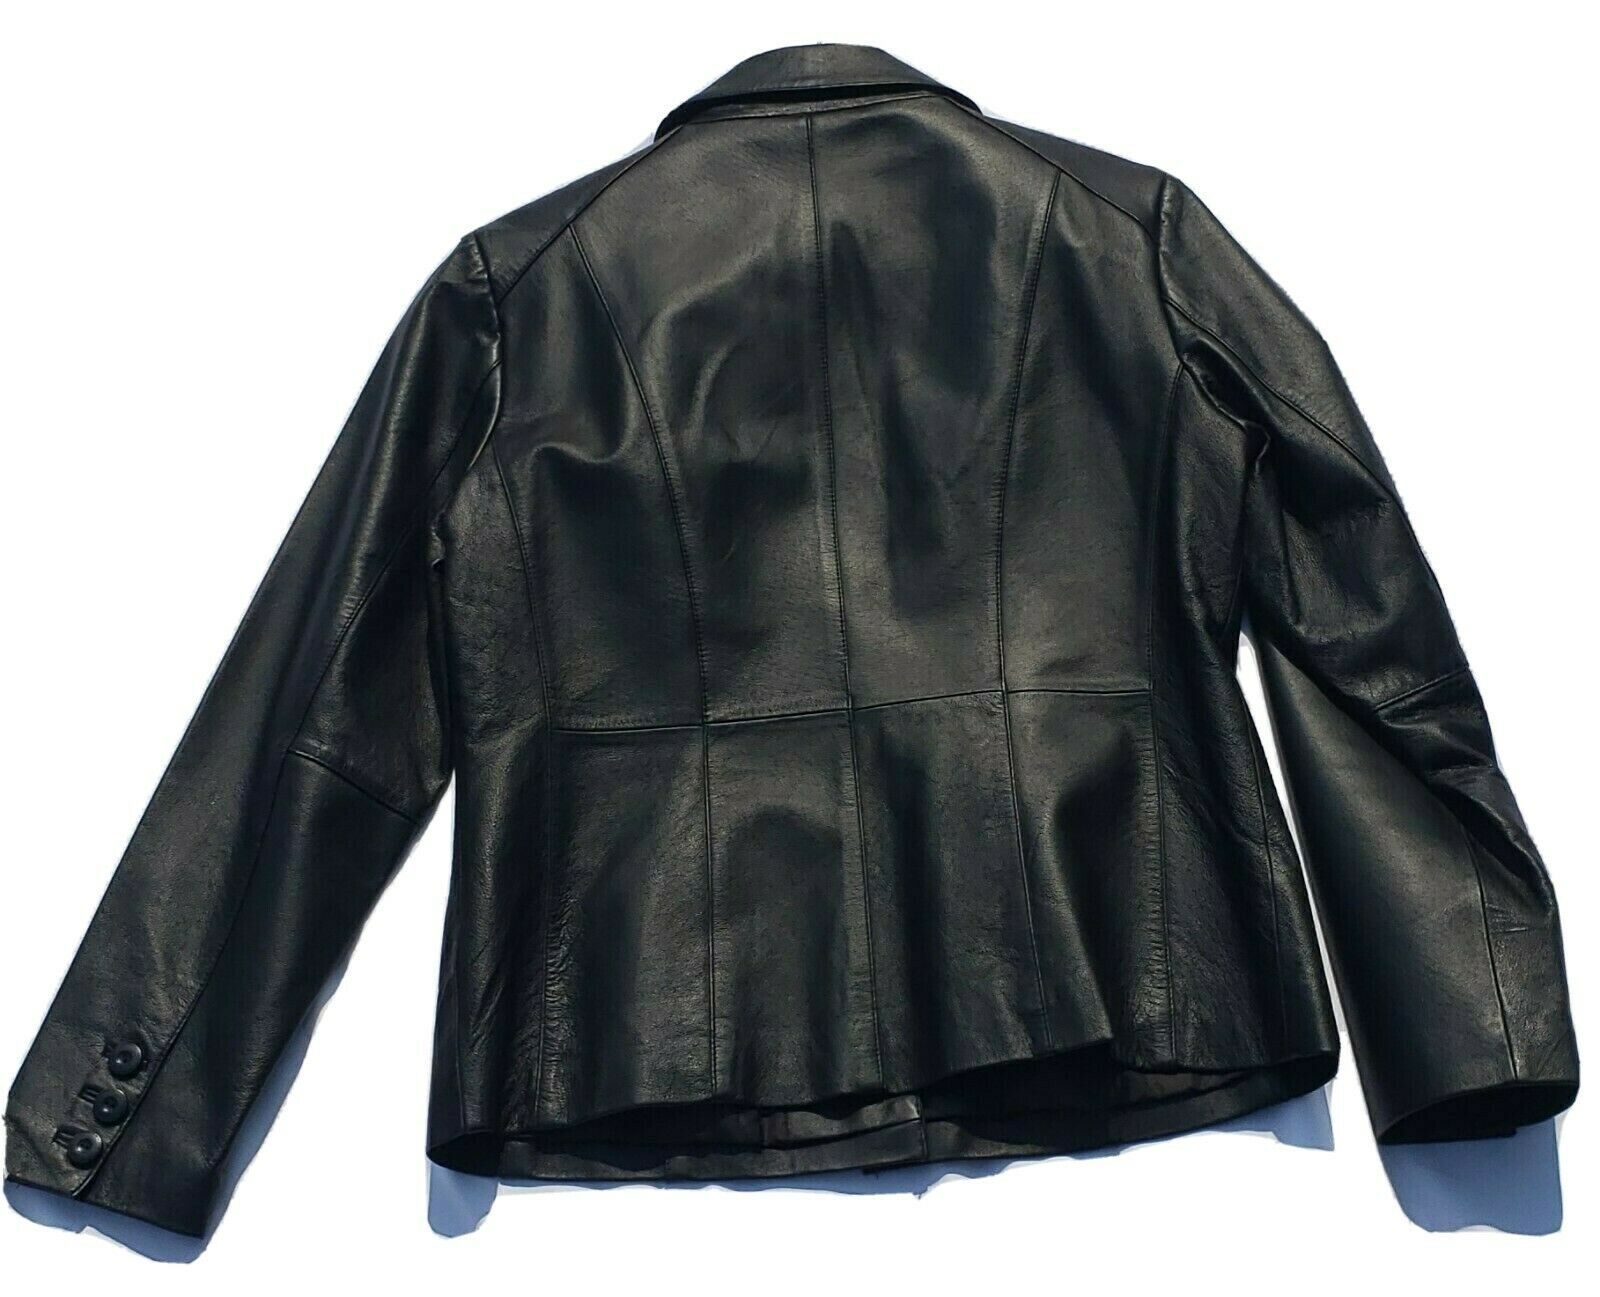 East 5th Black Leather Jacket (Petite Medium) - Coats, Jackets & Vests